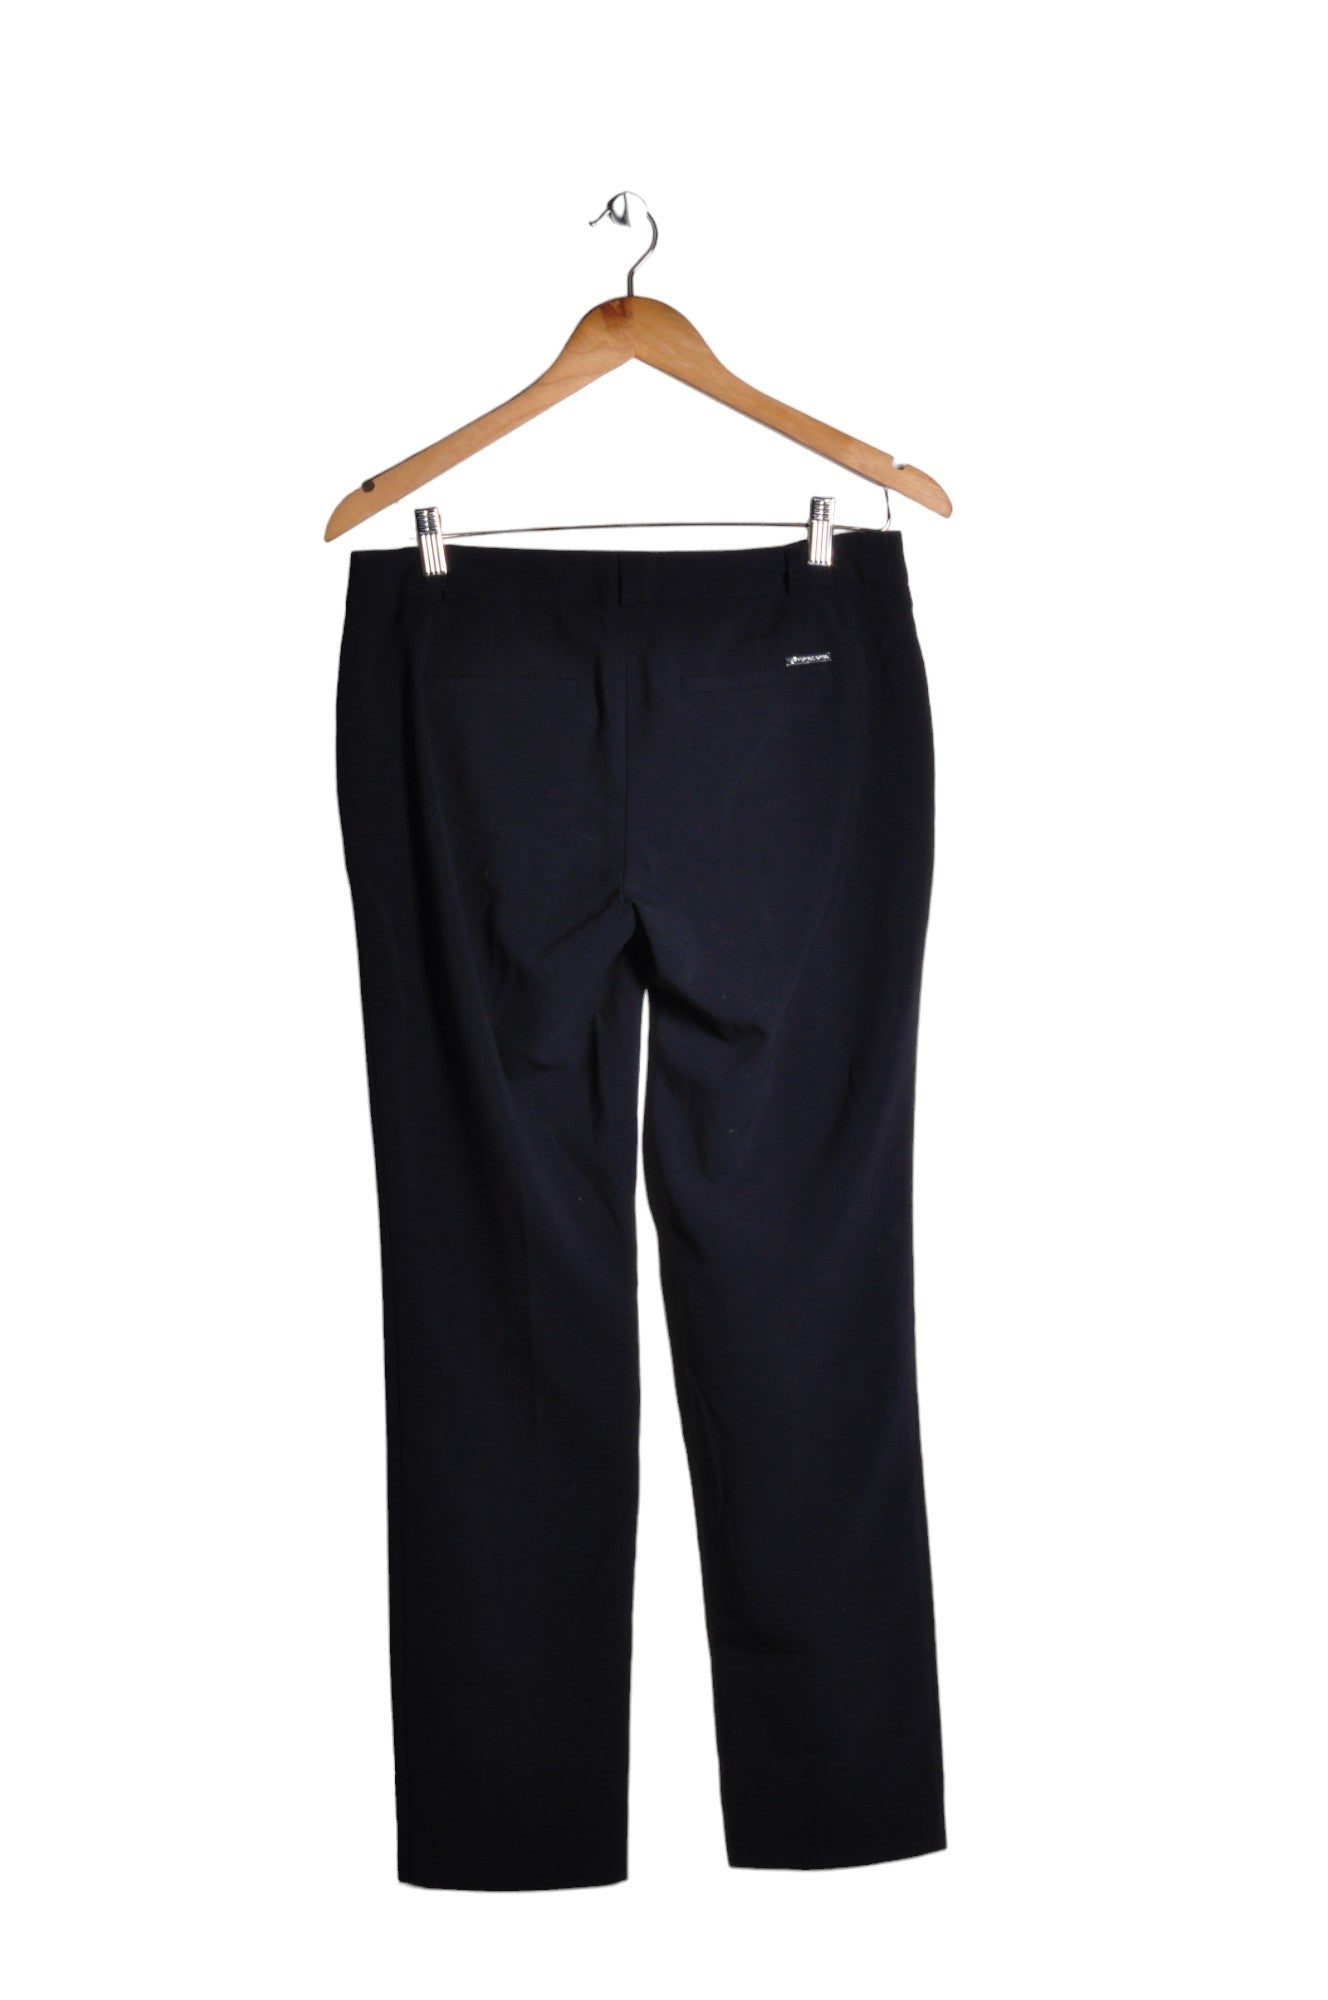 MICHAEL KORS Women Work Pants Regular fit in Blue - Size 4 | 118 $ KOOP